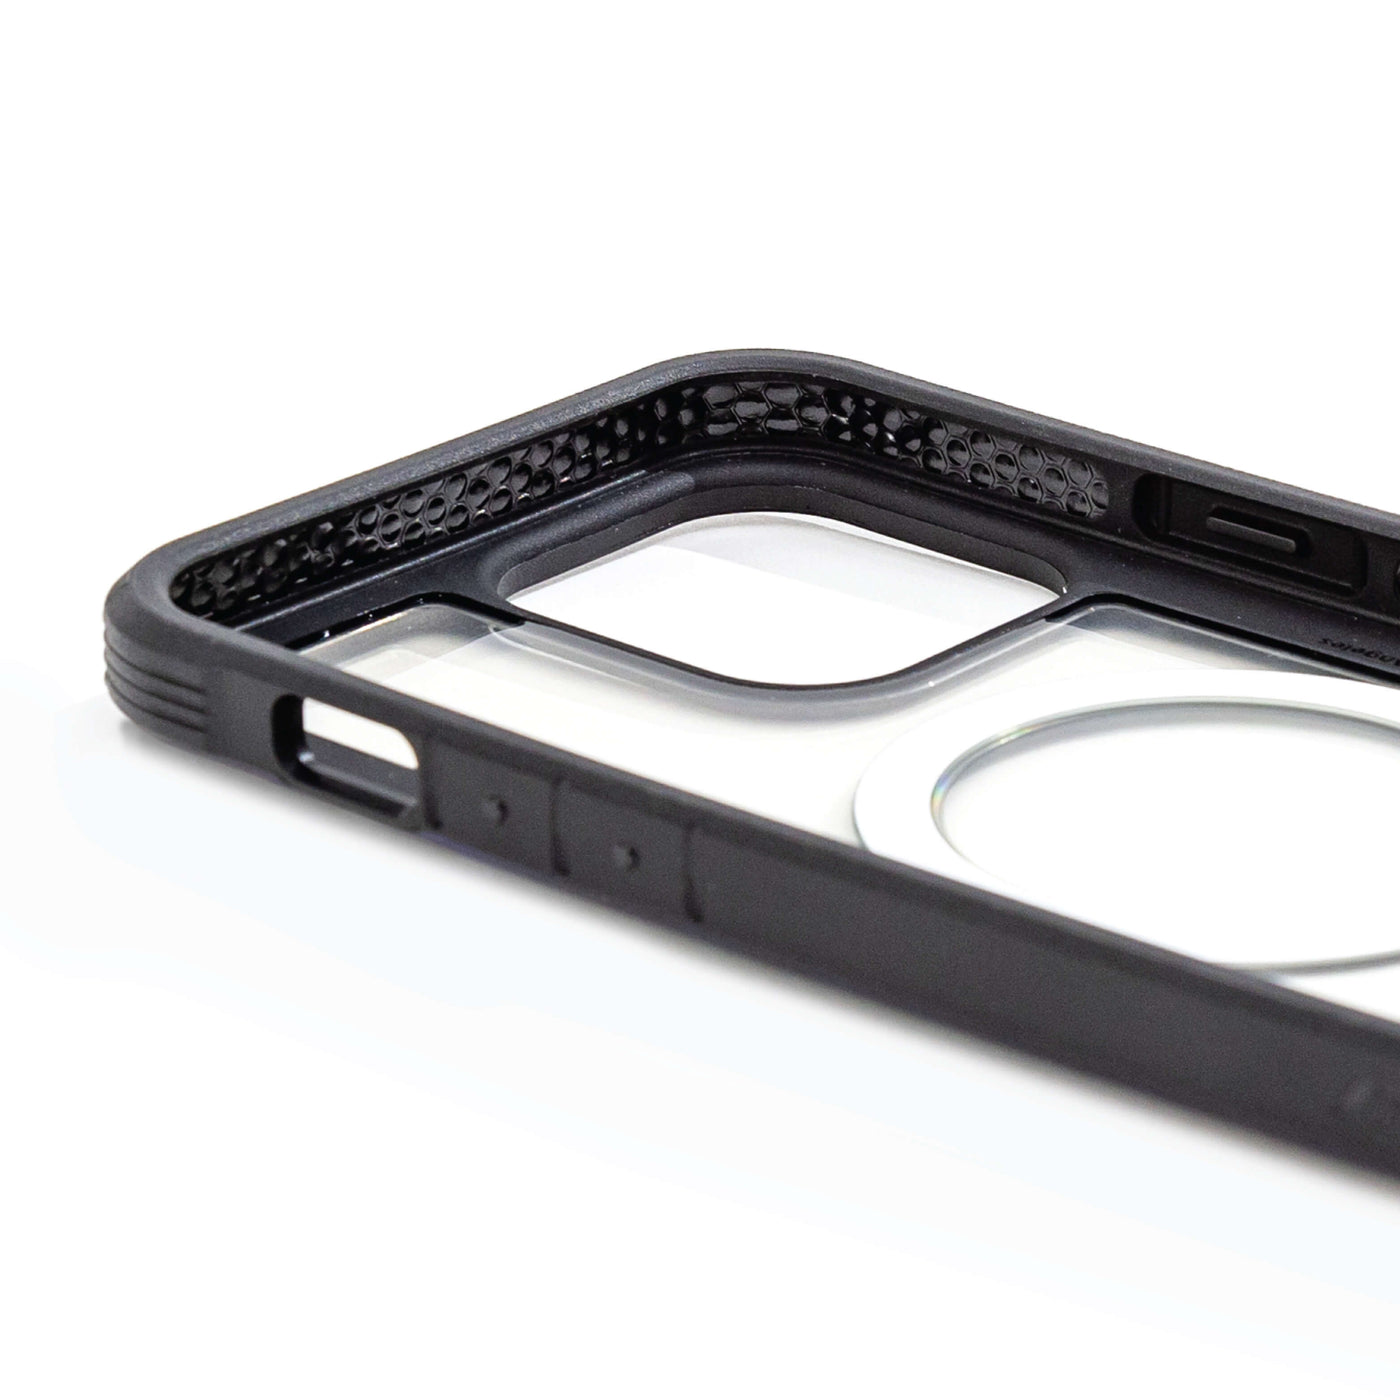 iPhone 15 Case - Shield 2.0 Onyx Black